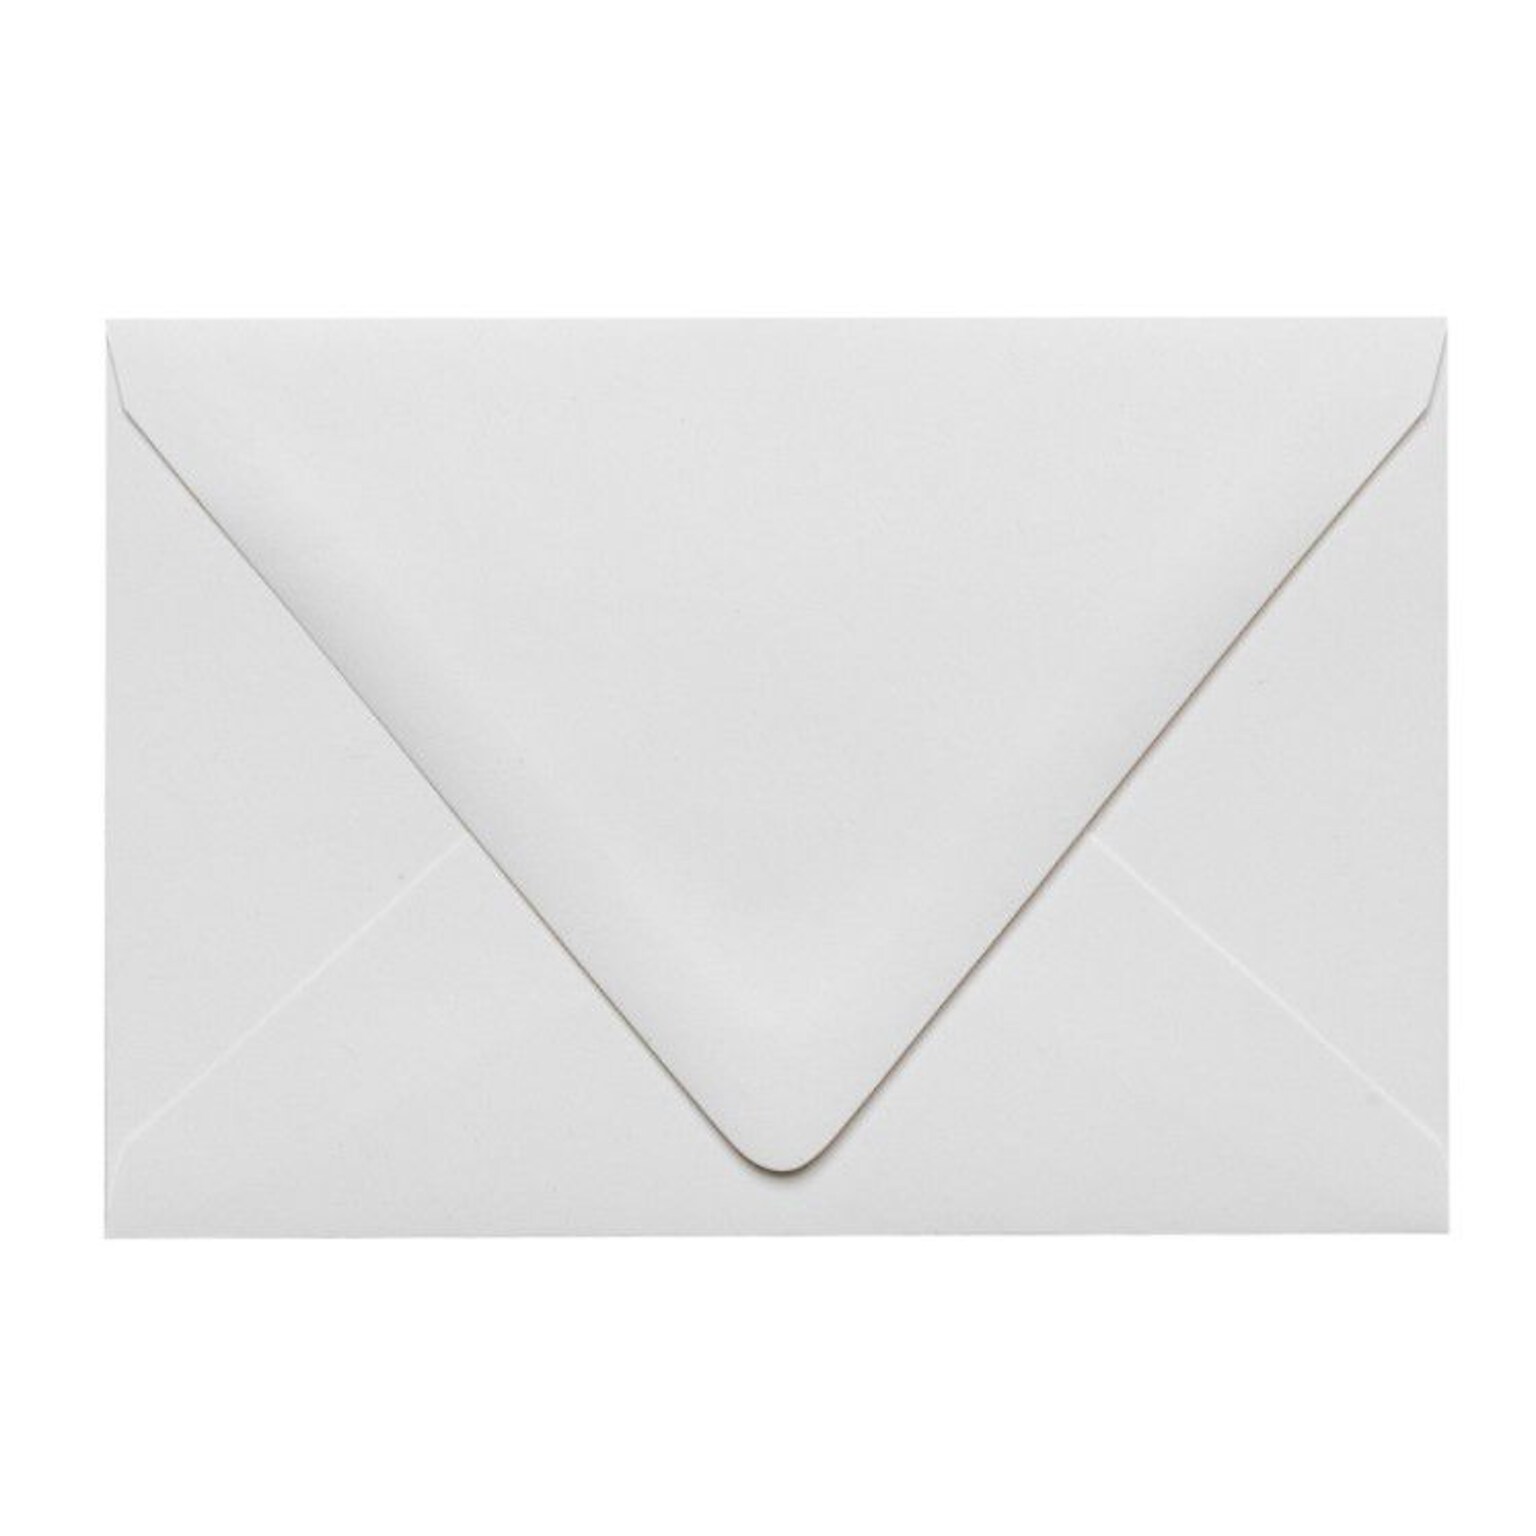 LUX A4 Contour Flap Envelopes (4 1/4 x 6 1/4) 1000/Box, White - 100% Recycled (1872-WPC-1000)